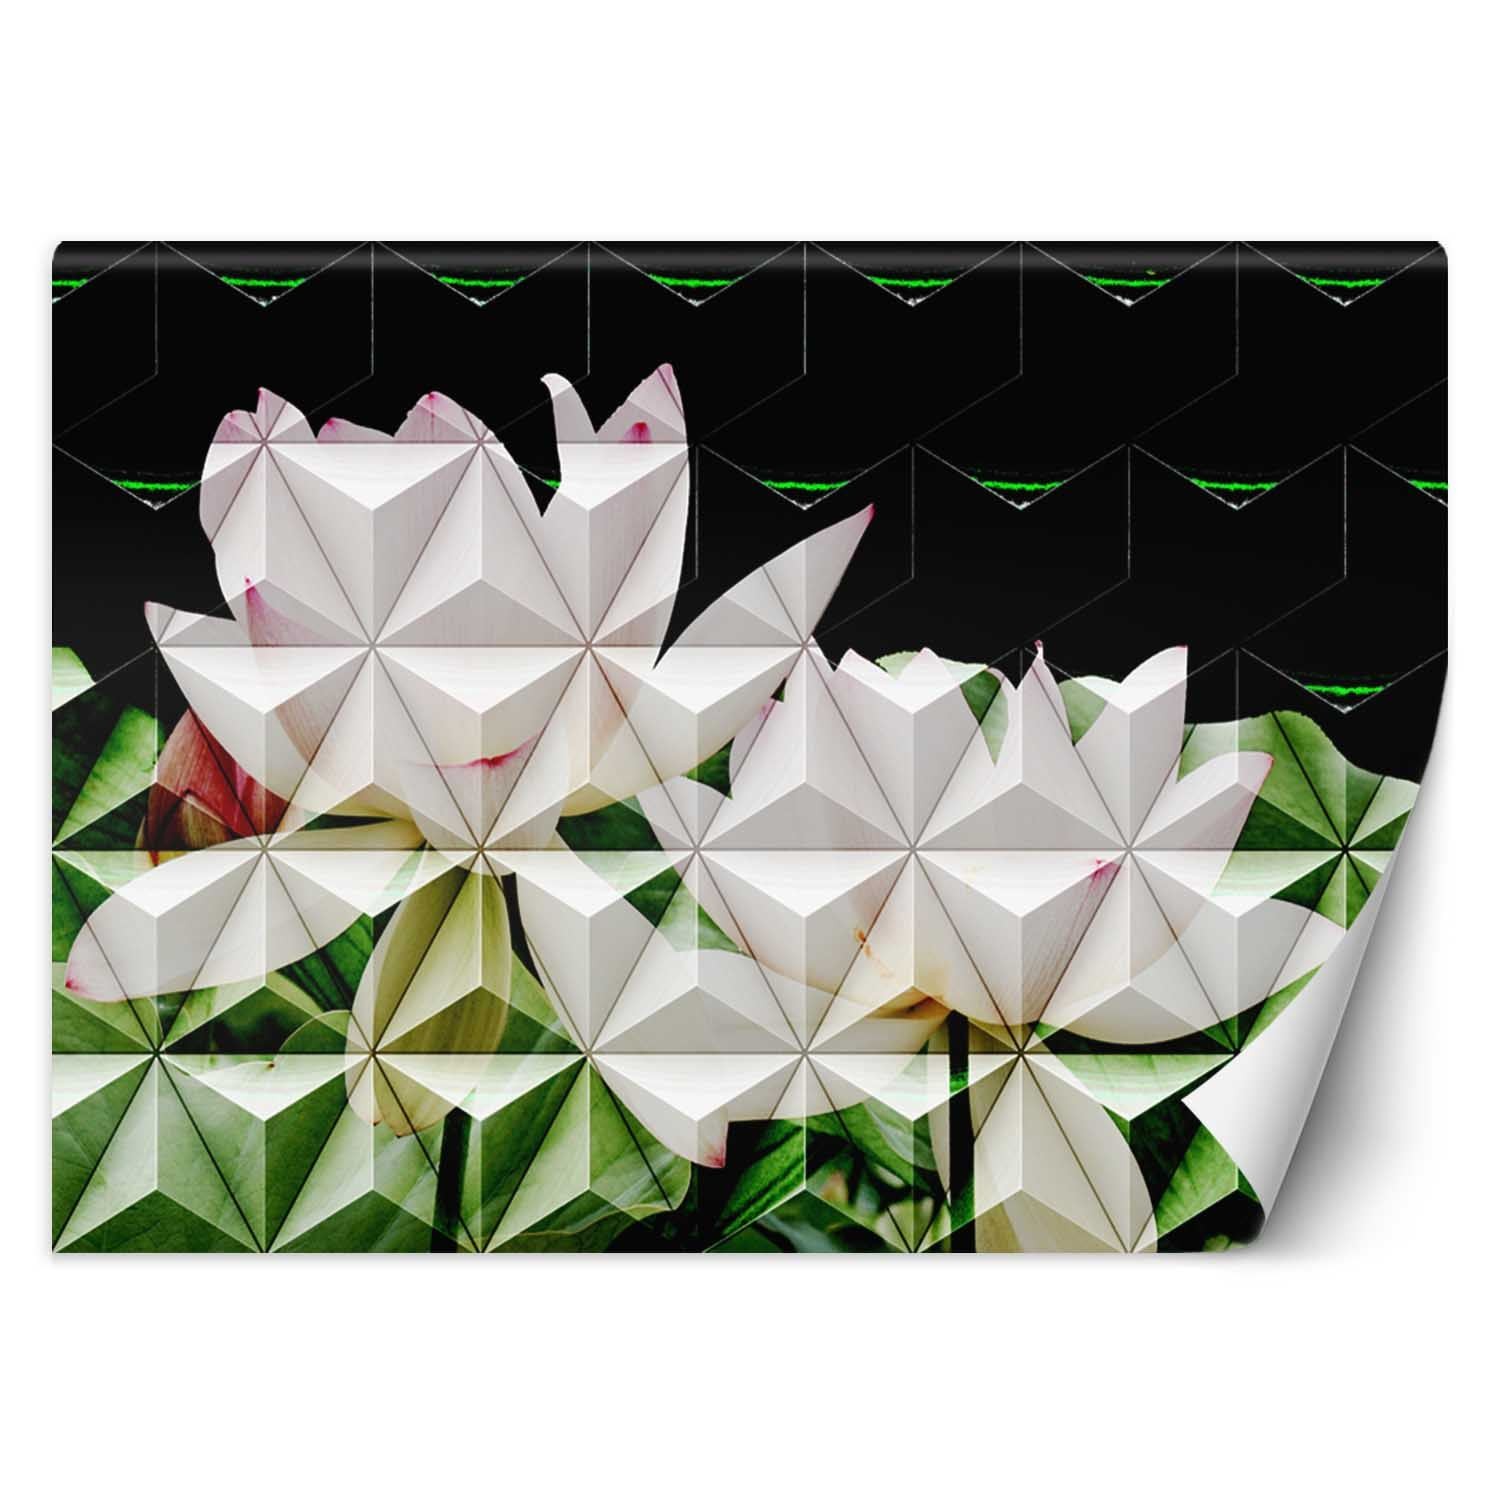 Trend24 – Behang – Lotusbloem Geometrisch – Vliesbehang – Behang Woonkamer – Fotobehang – 400x280x2 cm – Incl. behanglijm